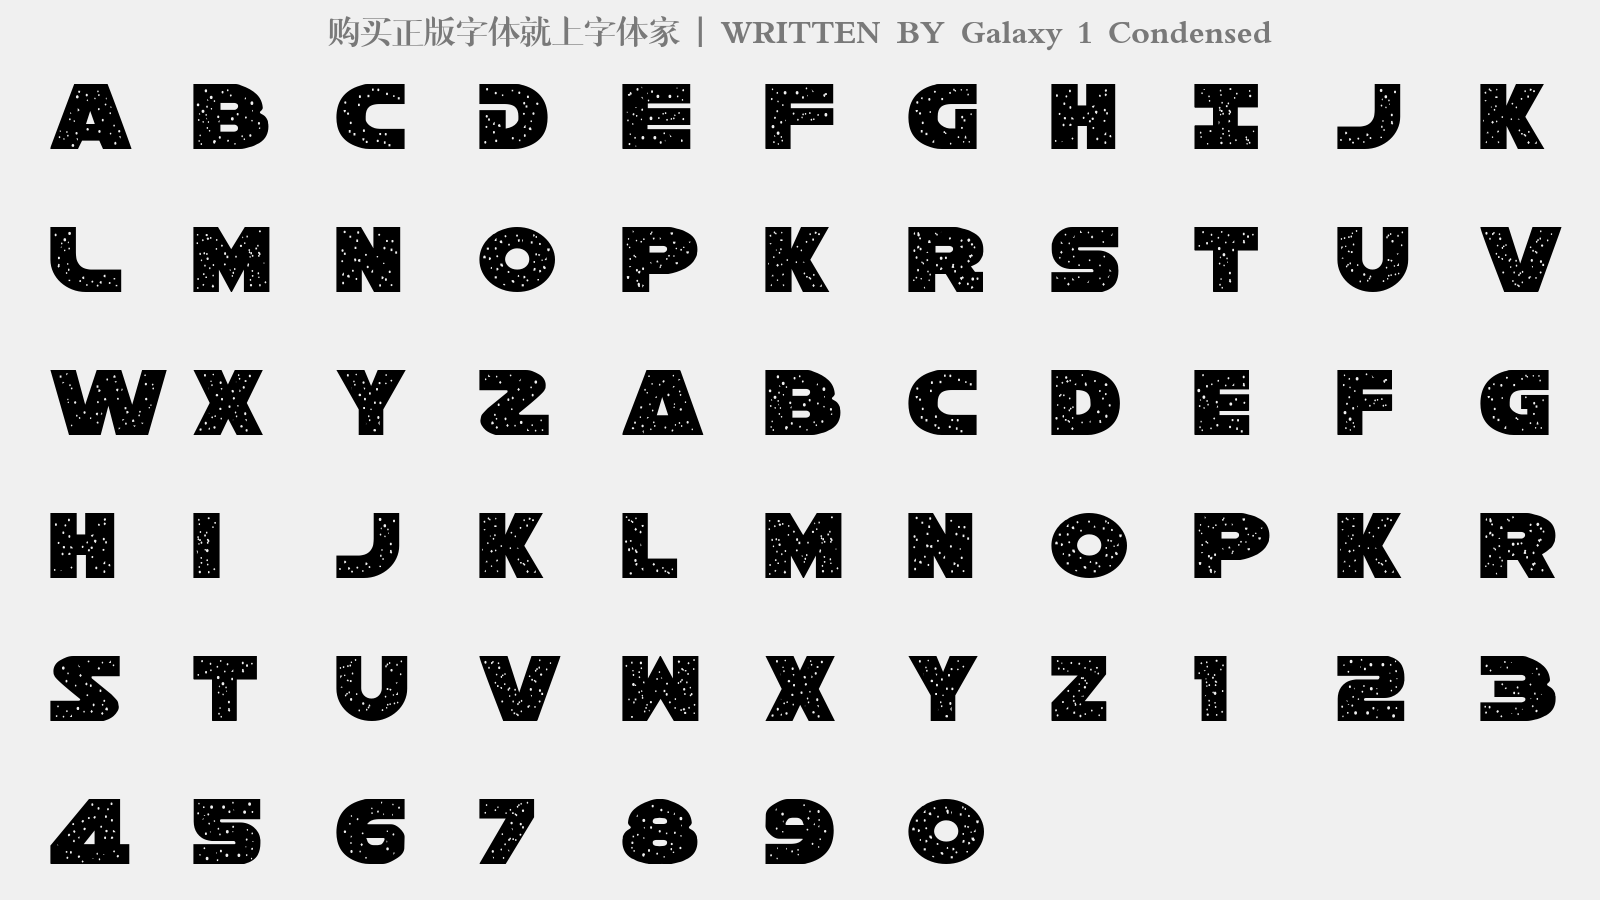 Galaxy 1 Condensed - 大写字母/小写字母/数字